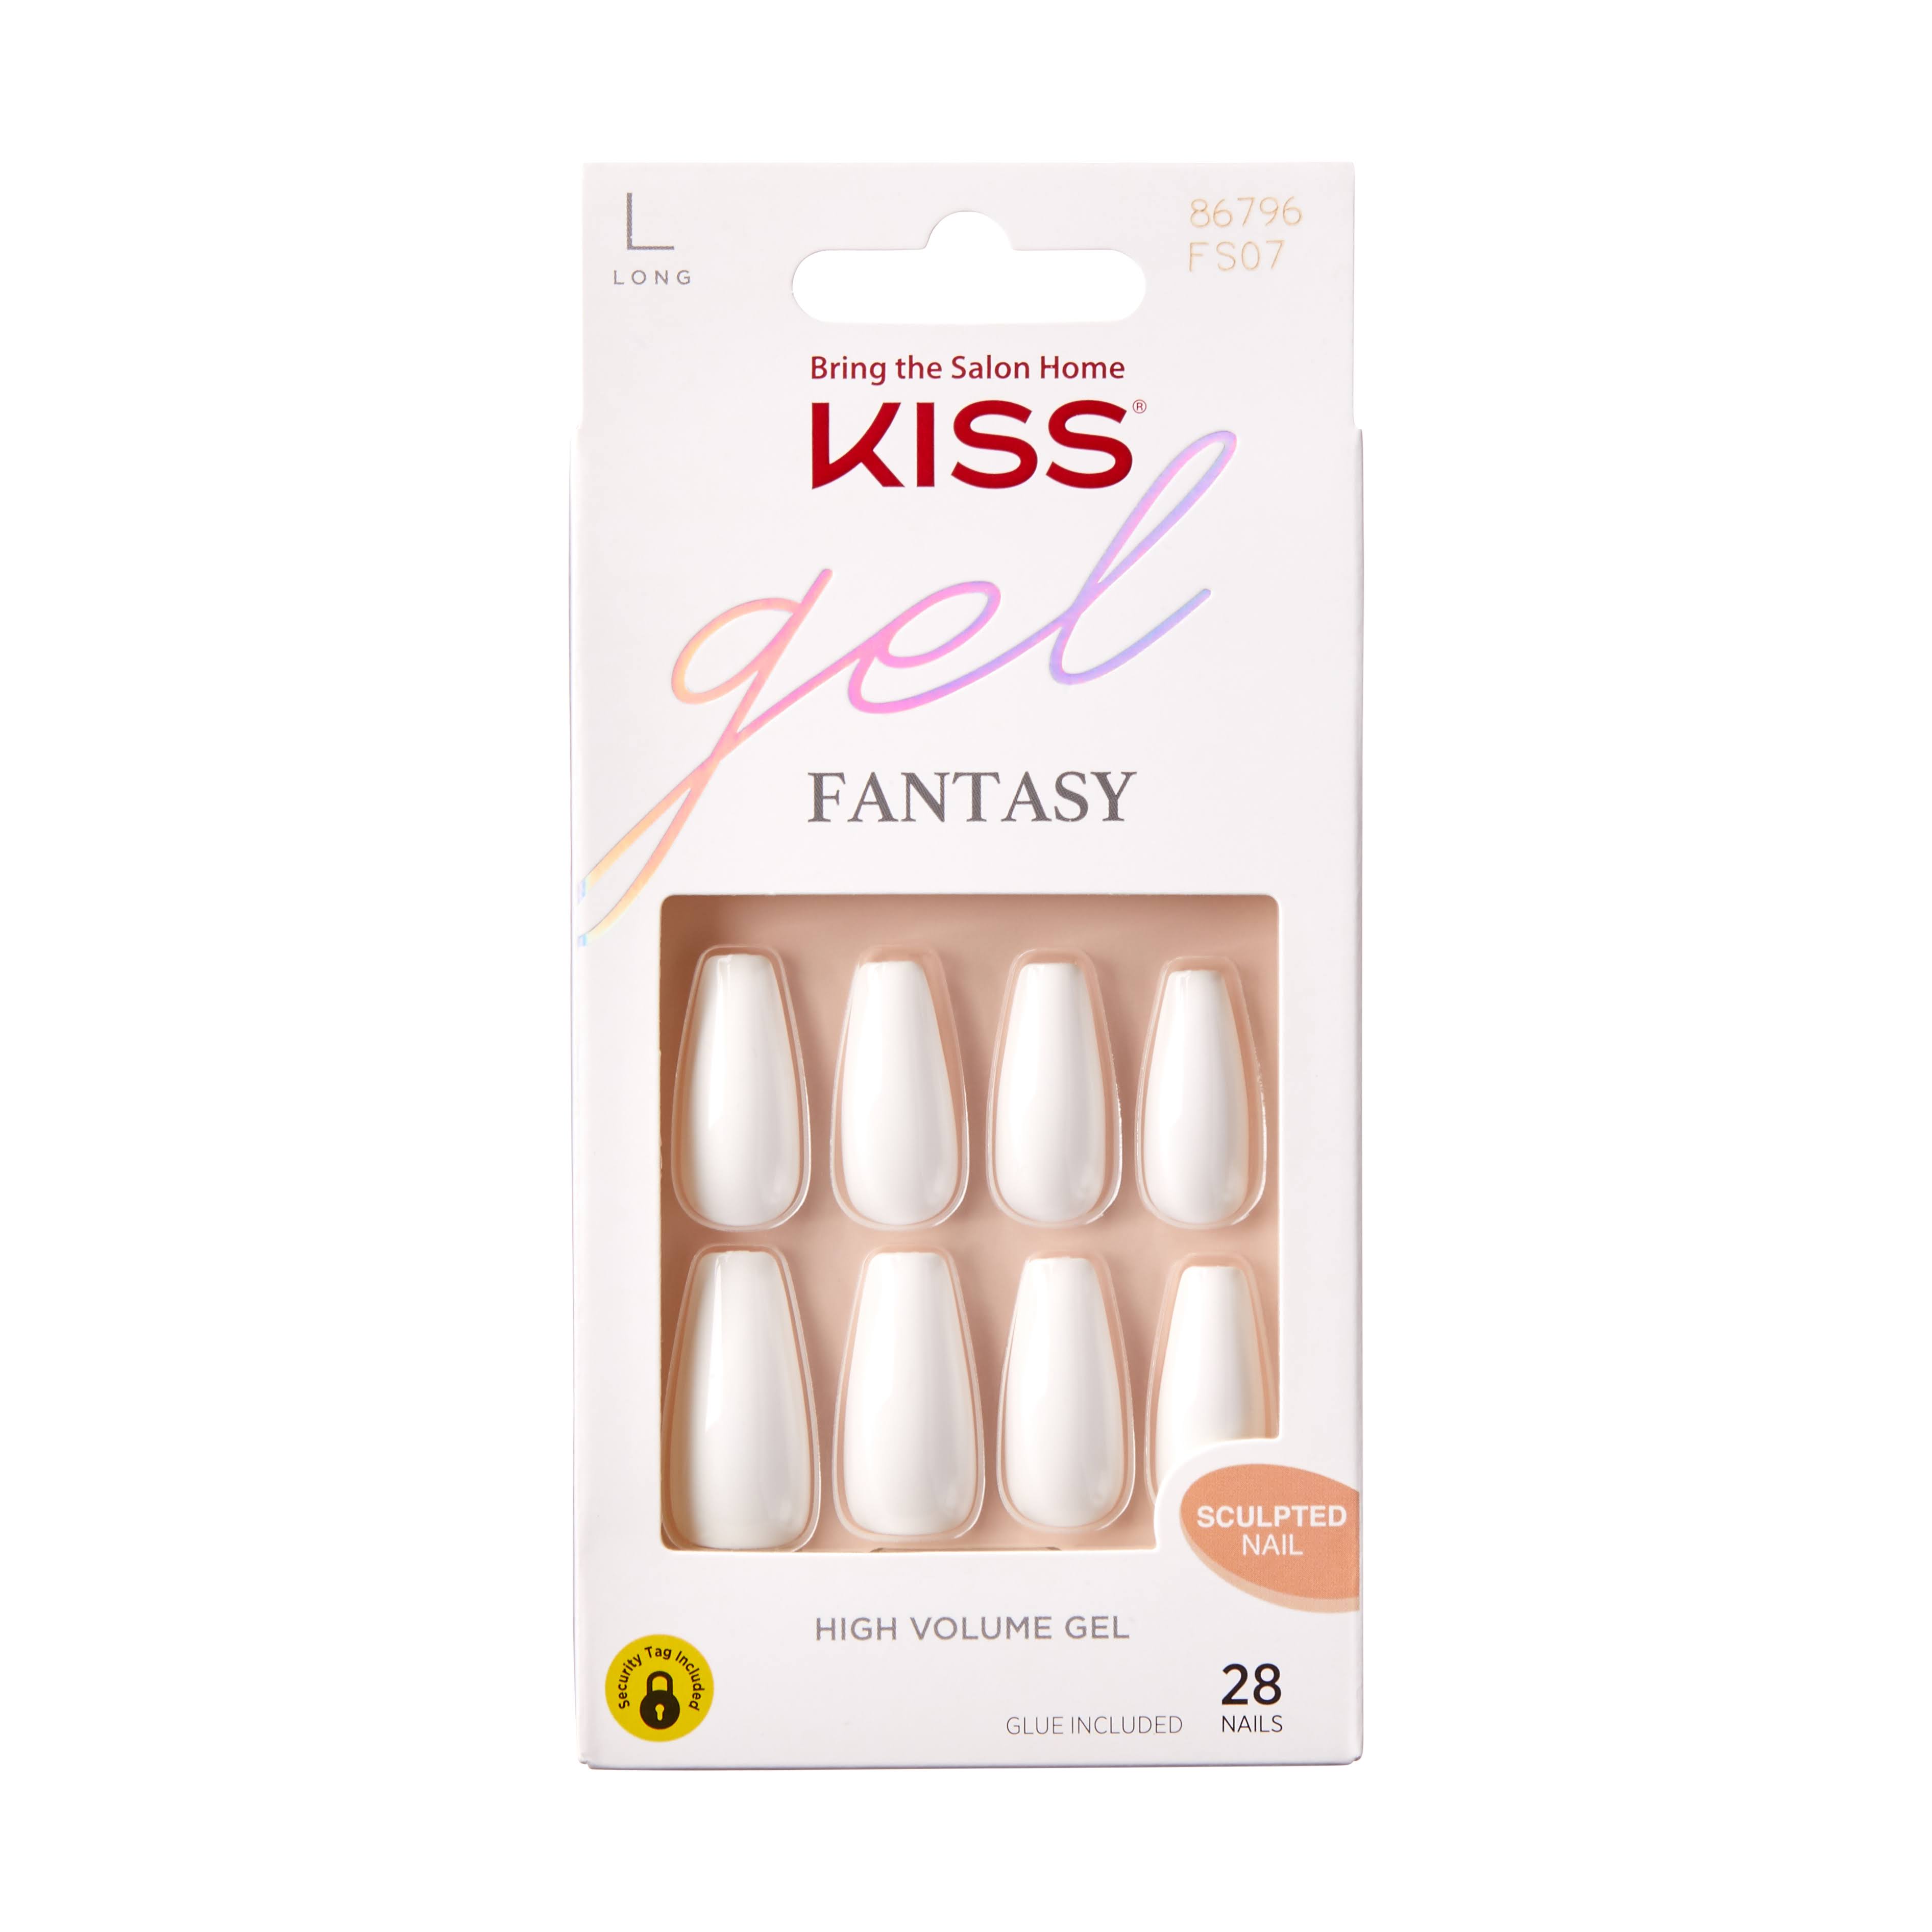 Kiss Gel Fantasy Nails - True Colour